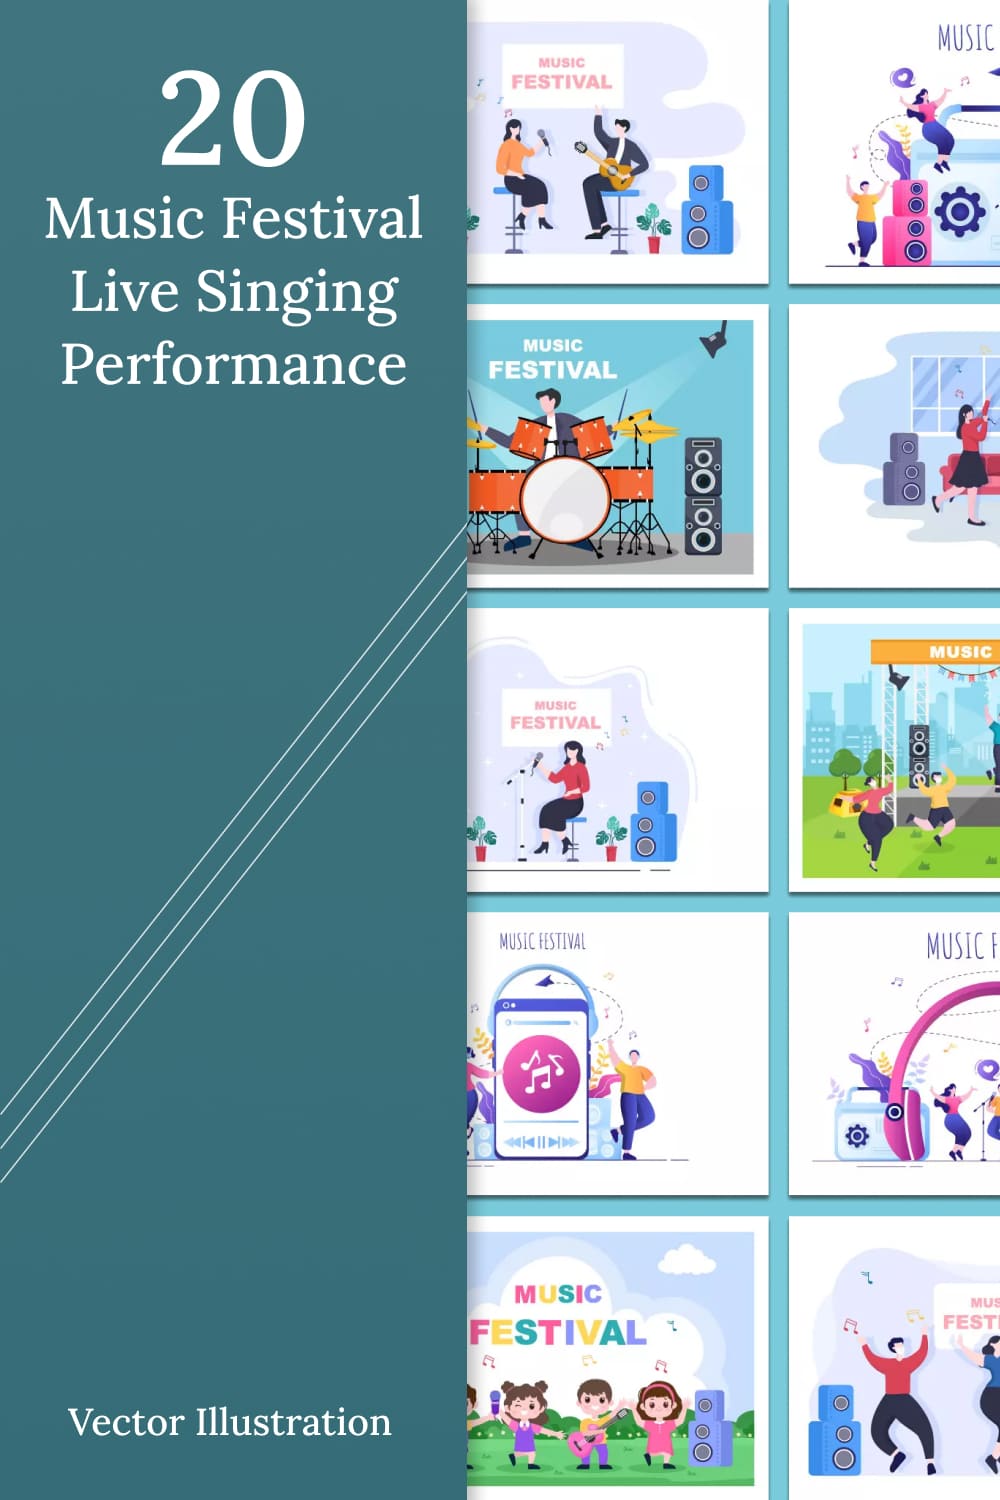 20 music festival live singing performance vector illustration 03